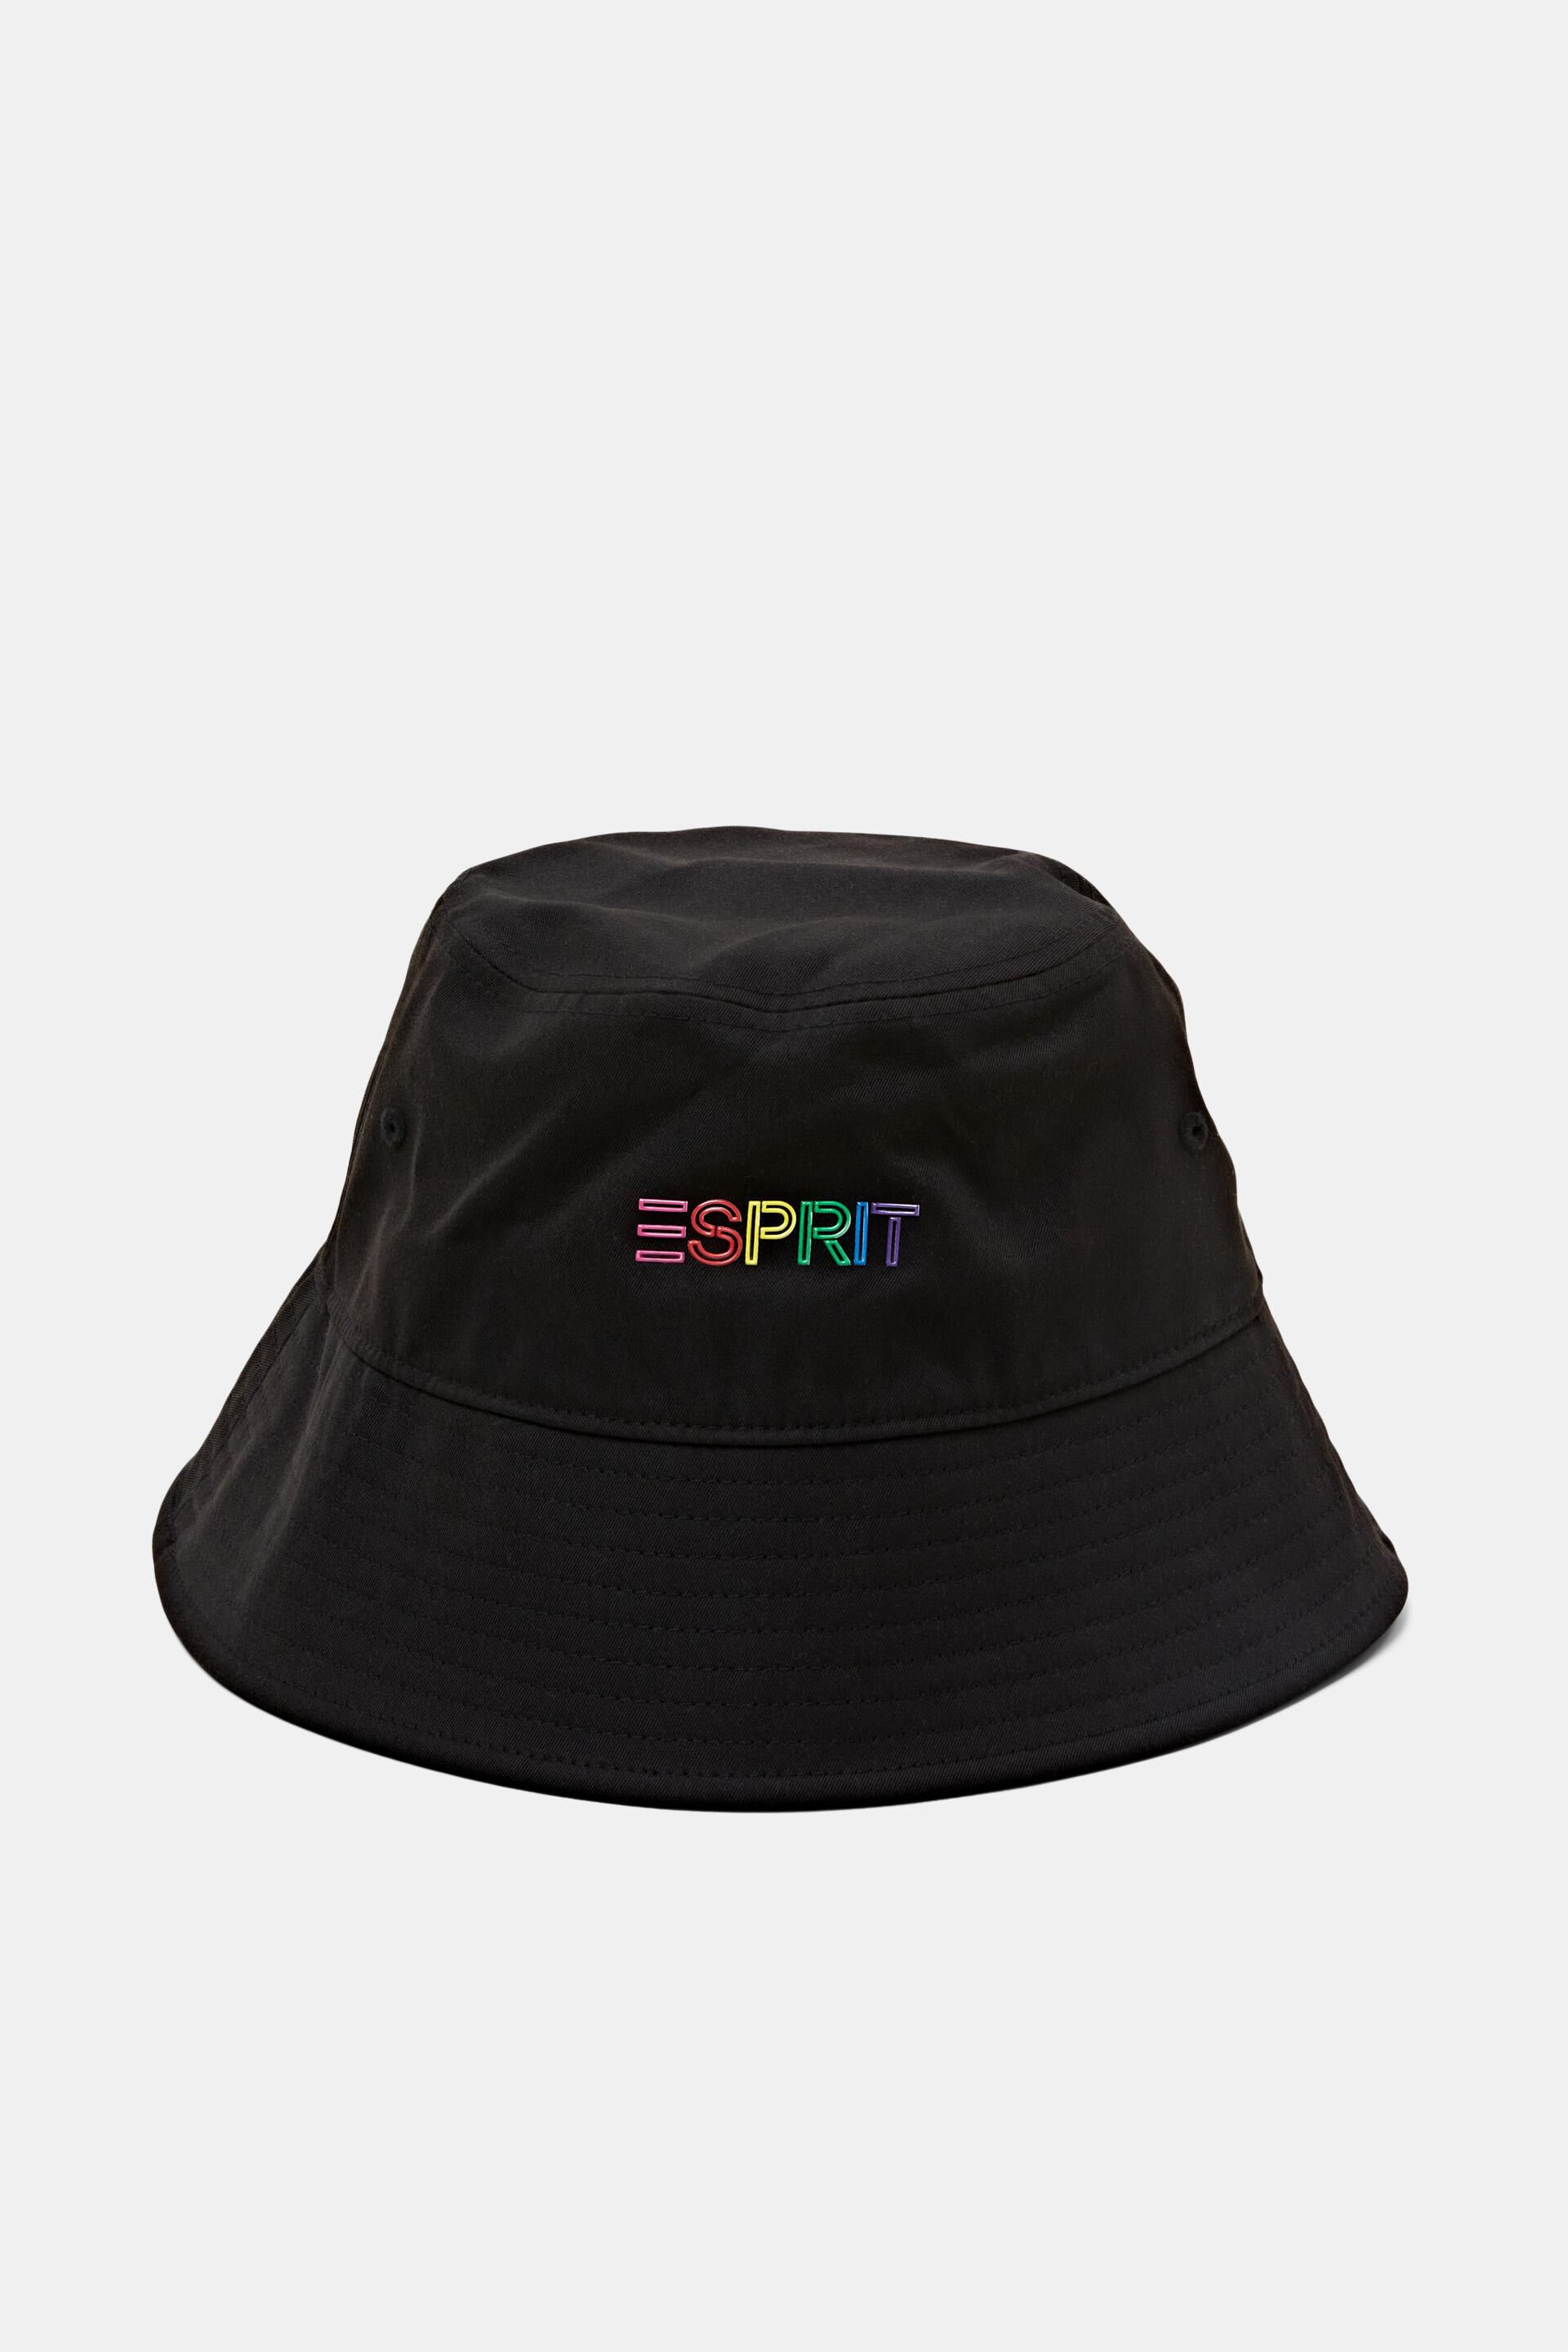 Esprit Twill Bucket Hat Appliqué